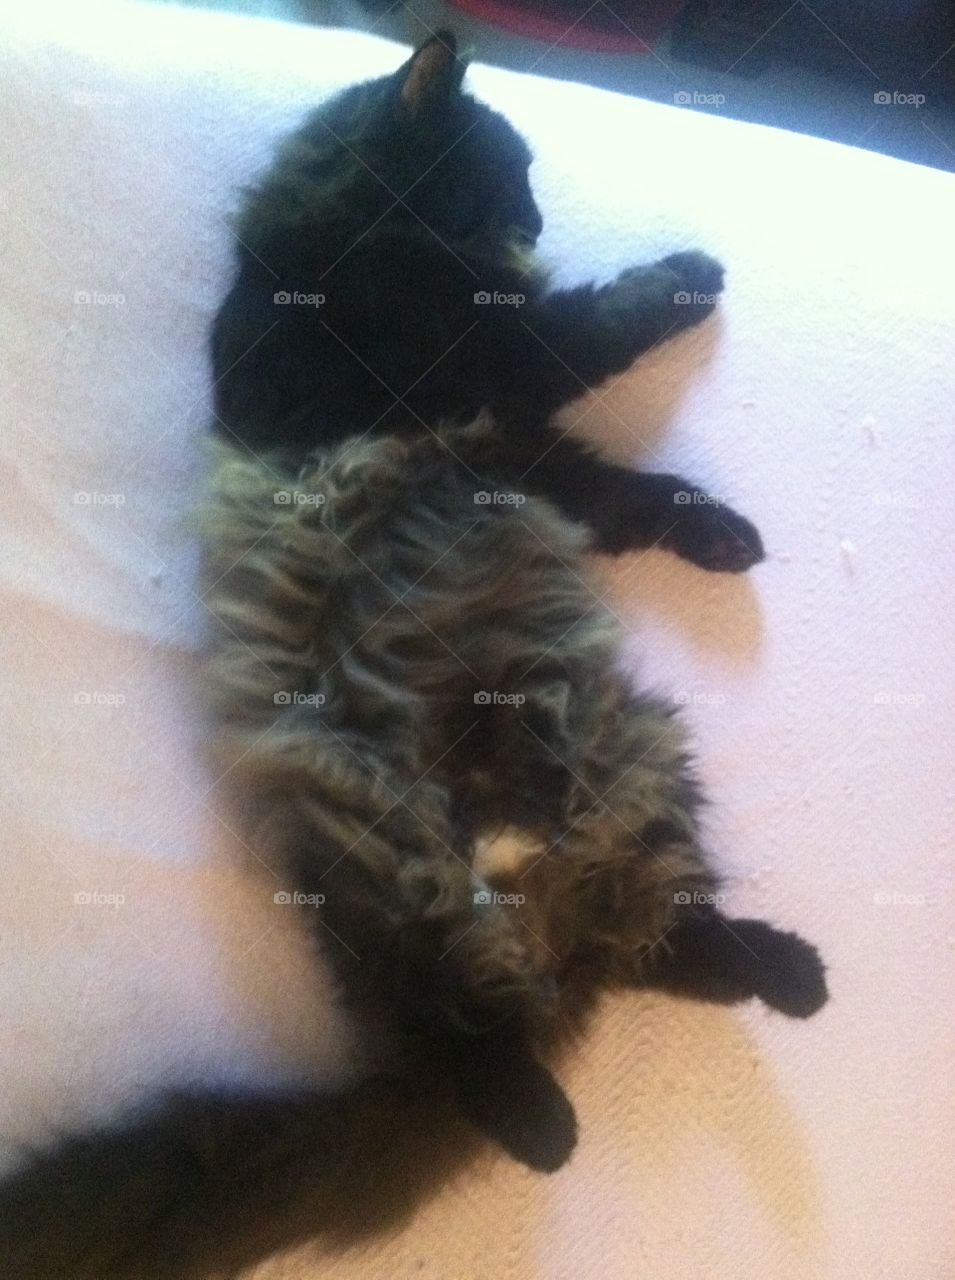 Fluffy black kitty belly